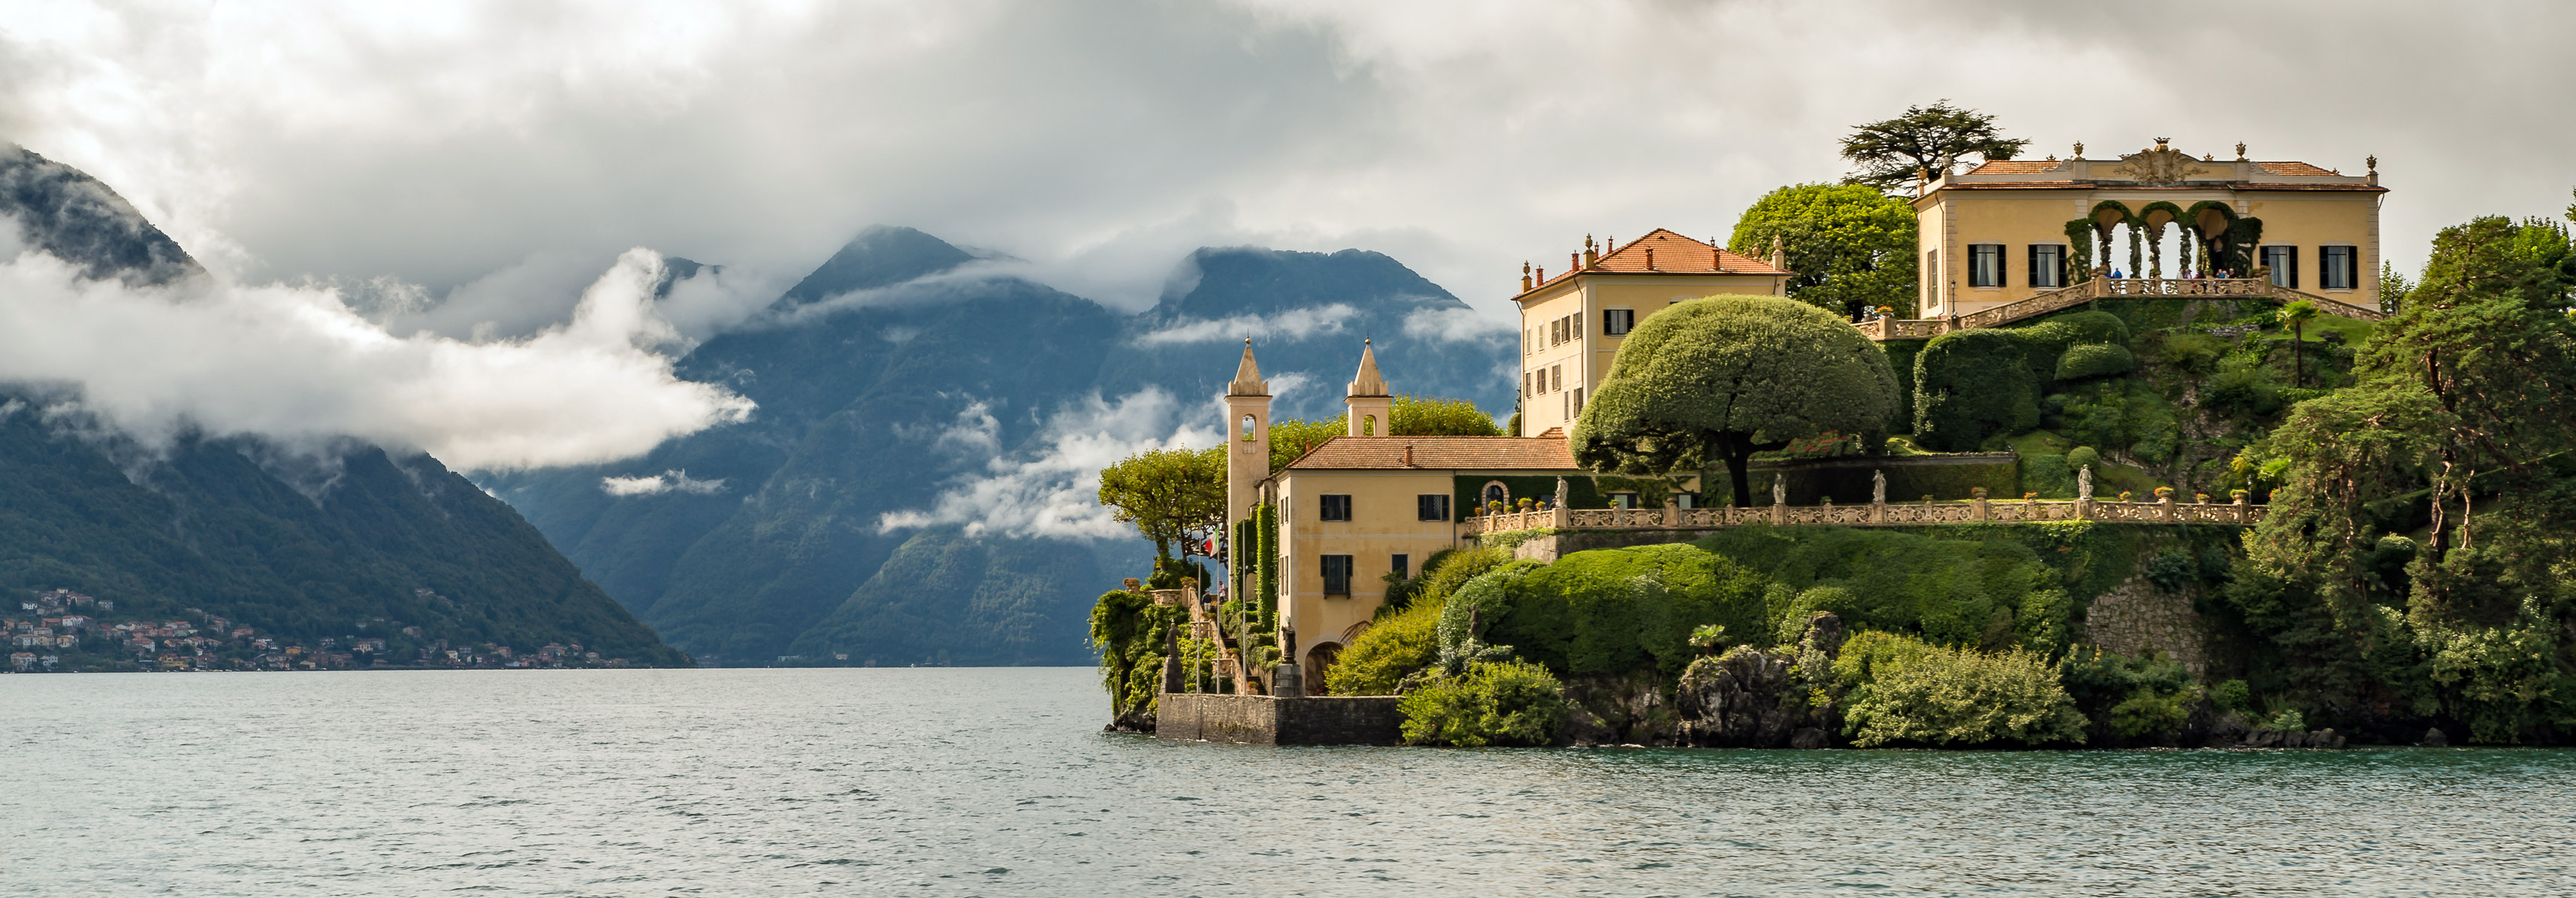 The Beautiful Villa del Balbianello is a villa and garden in the comune of Lenno, Italy, a small wooded peninsula overlooking Lake Como